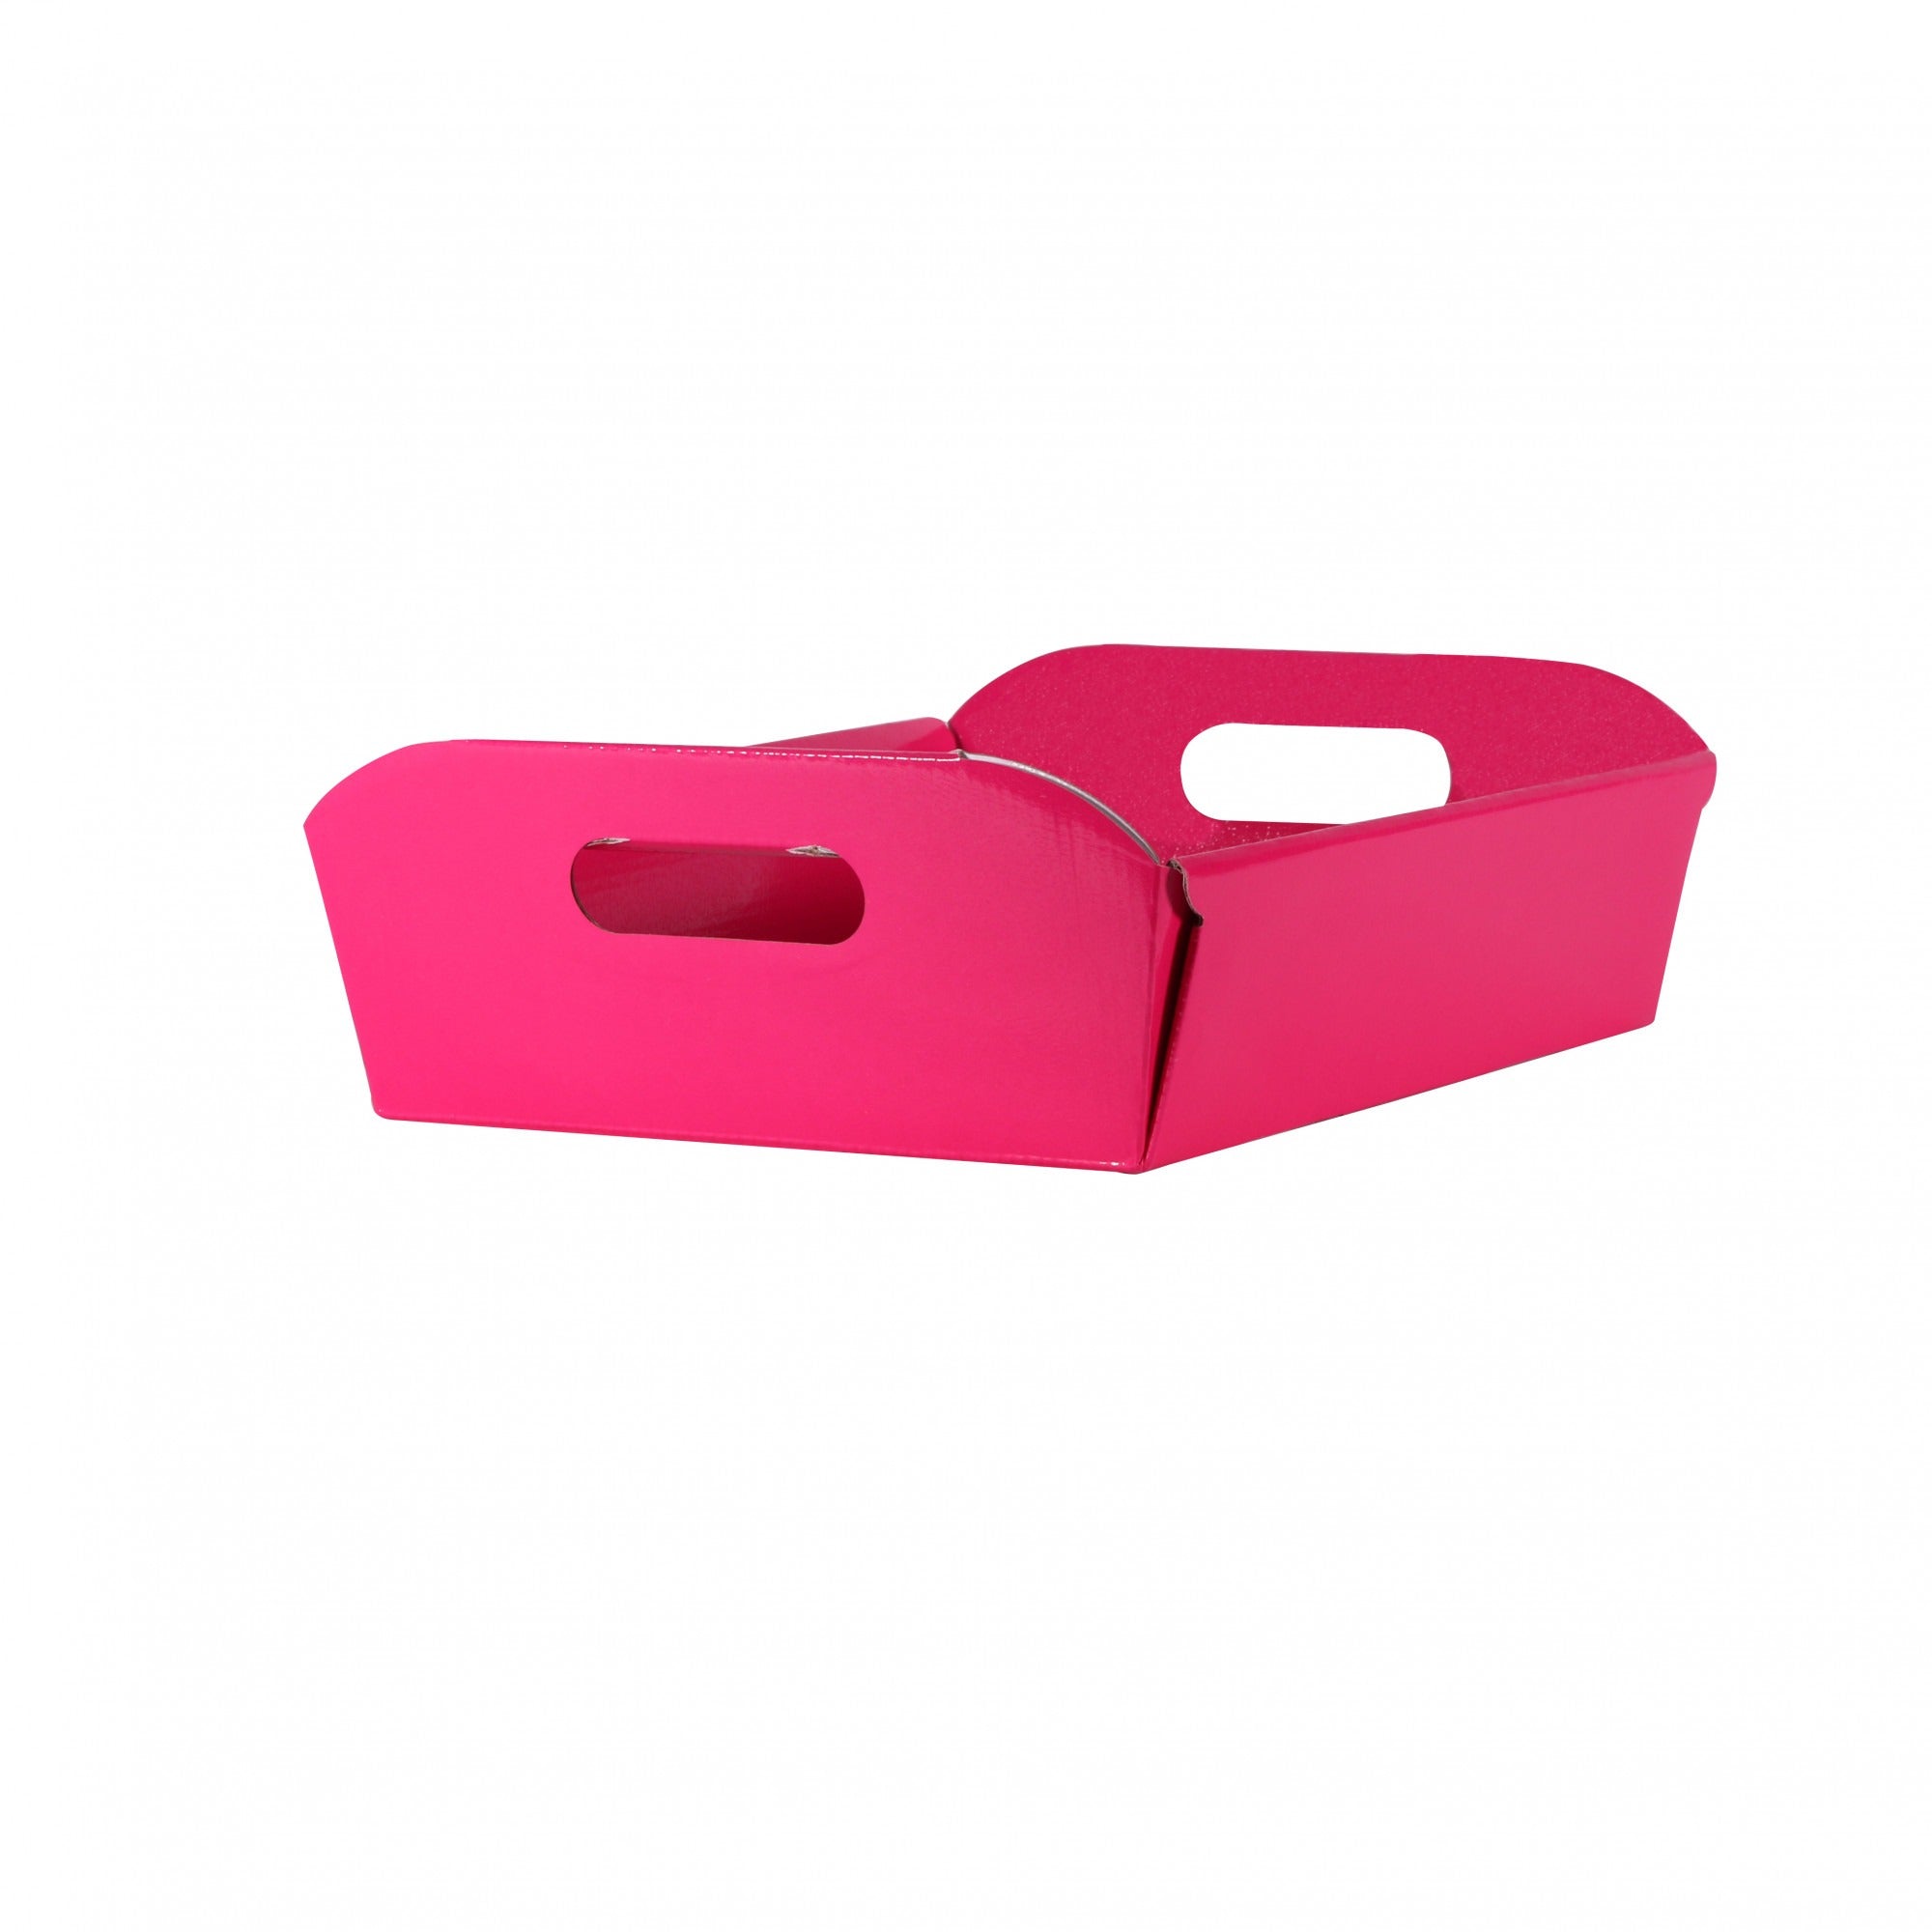 View 345cm Hot Pink Small Hamper Box information